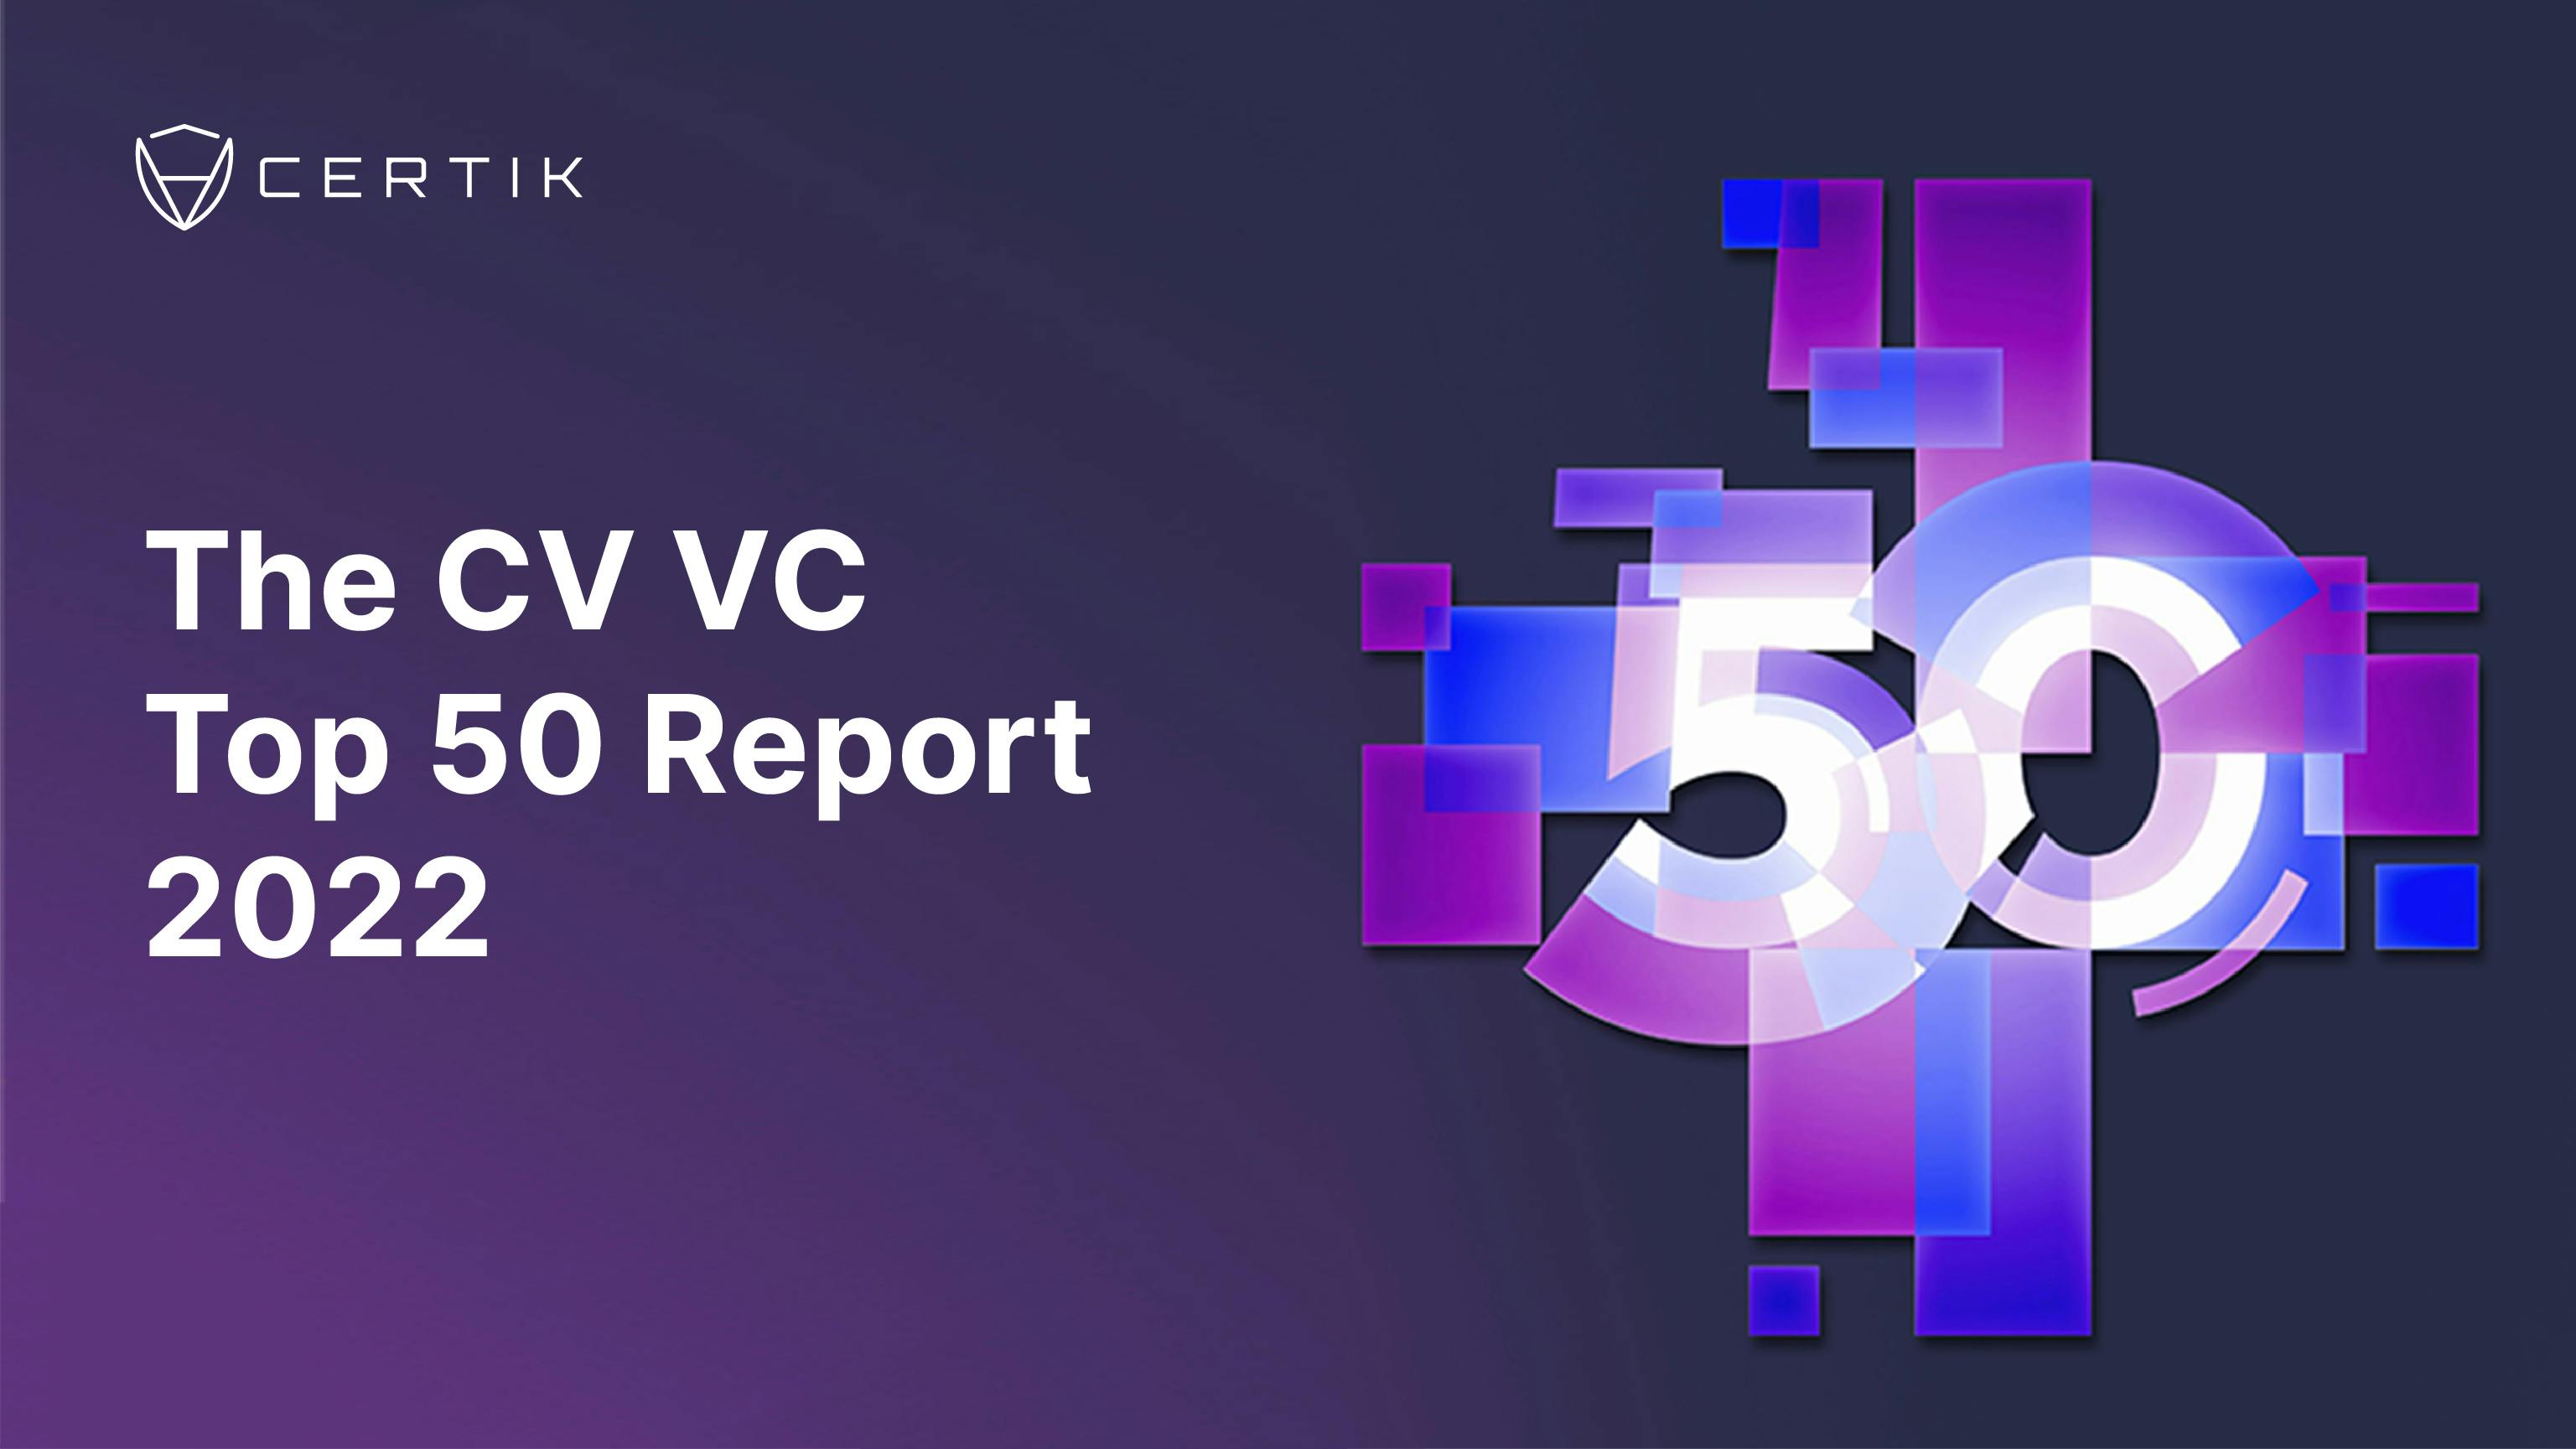 The CV VC Top 50 Report 2022